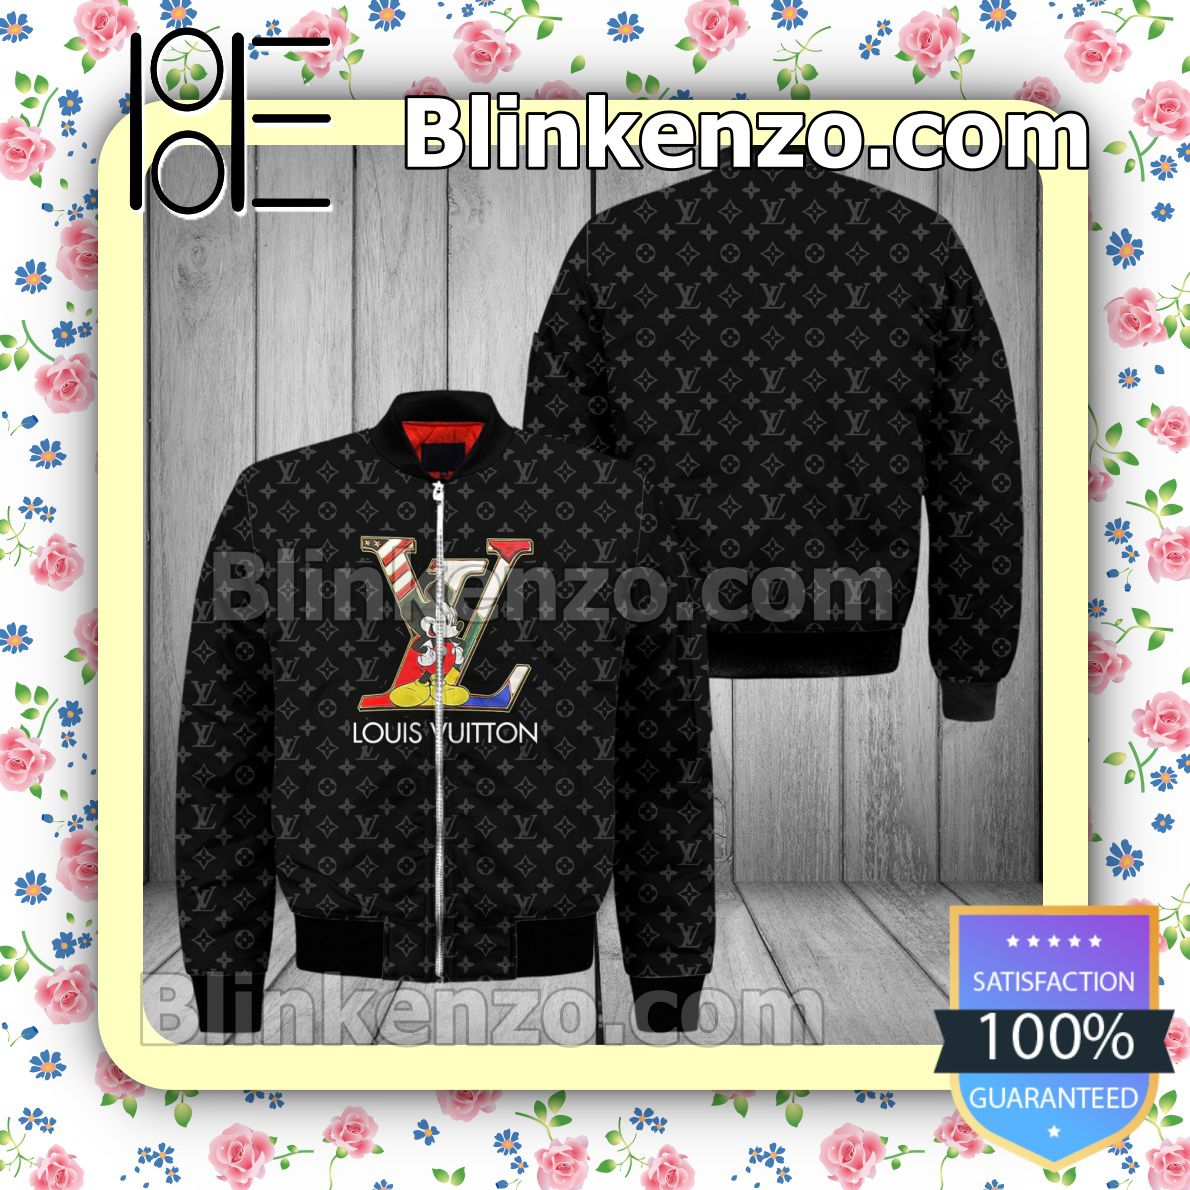 Louis Vuitton Mickey Mouse Black Monogram Military Jacket Sportwear